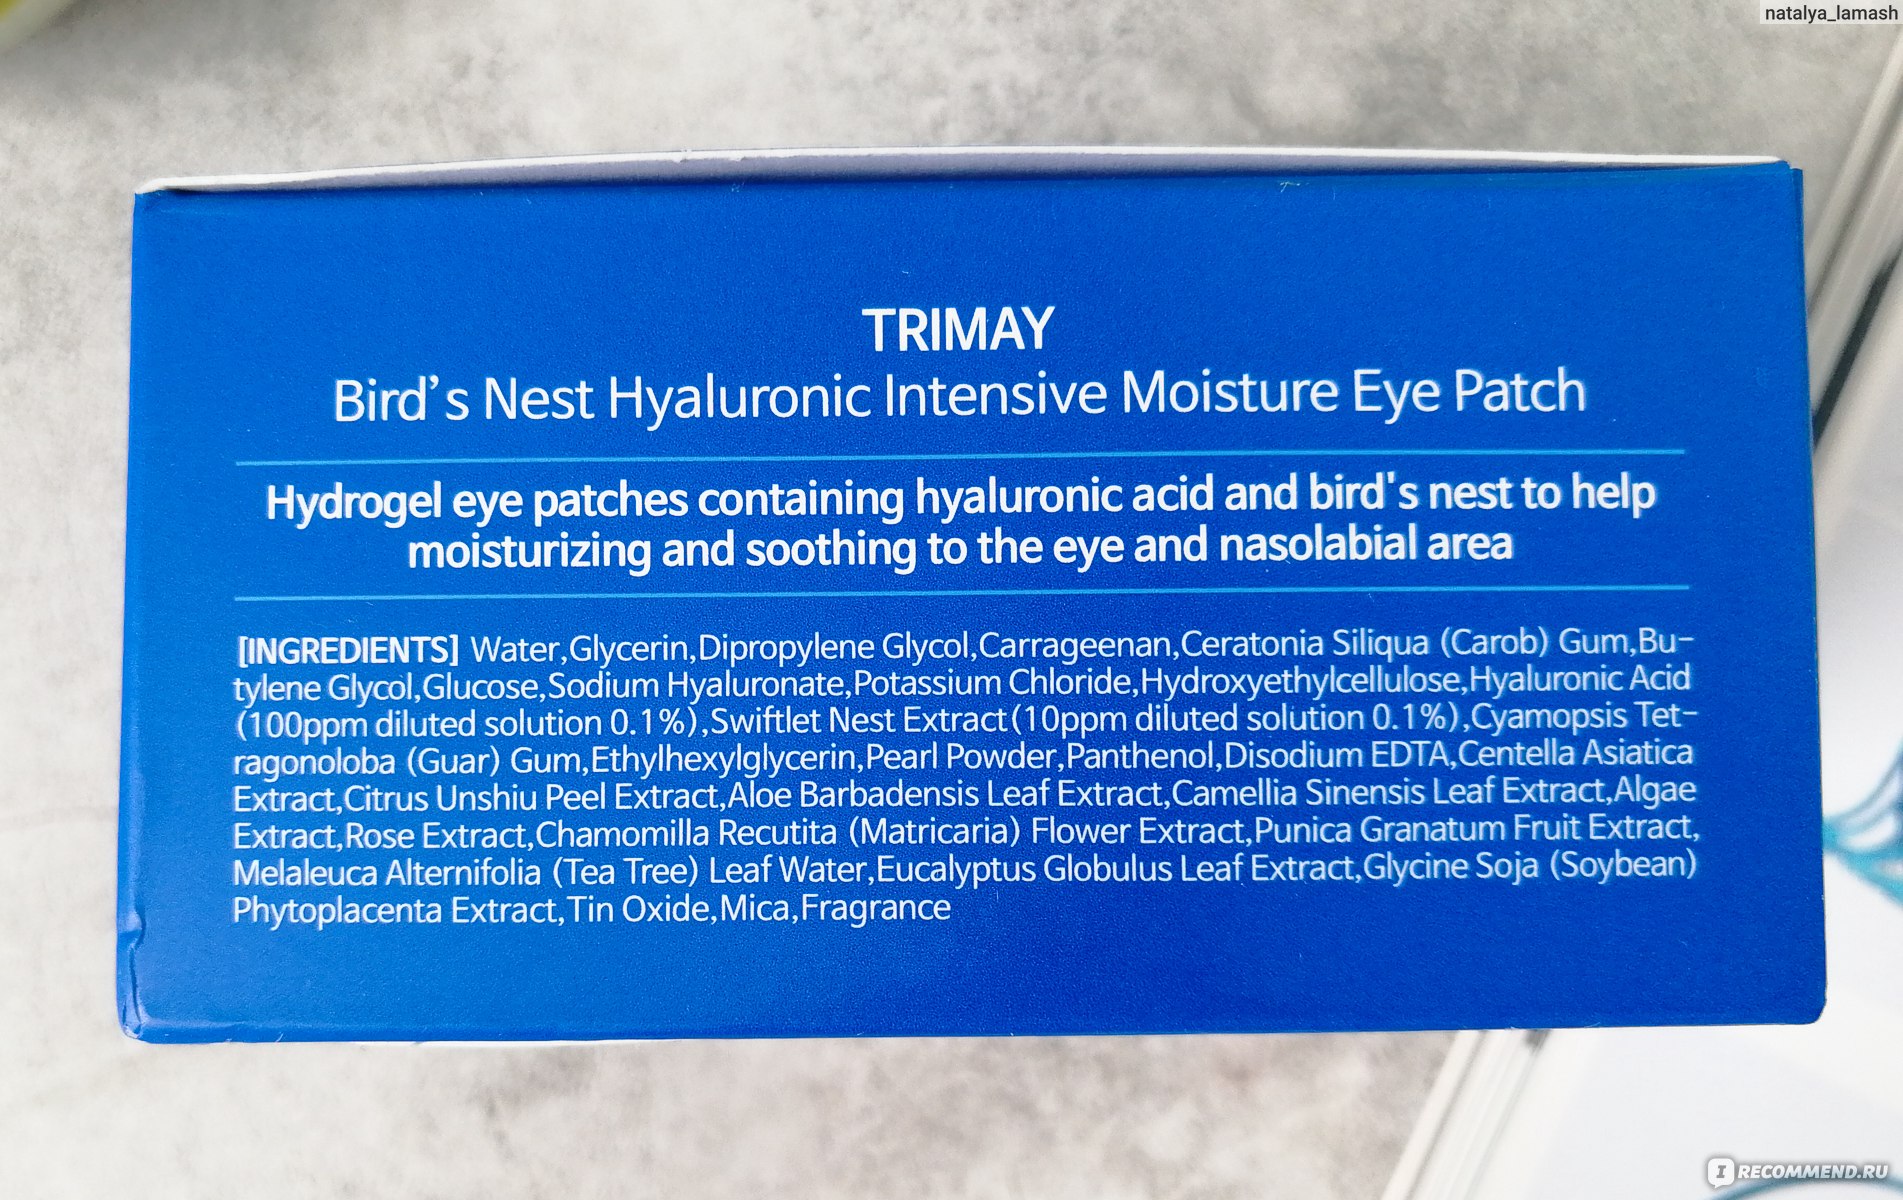  Гидрогелевые патчи для глаз Trimay Bird’s Nest Hyaluronic Intensive Moisture Eye Patch